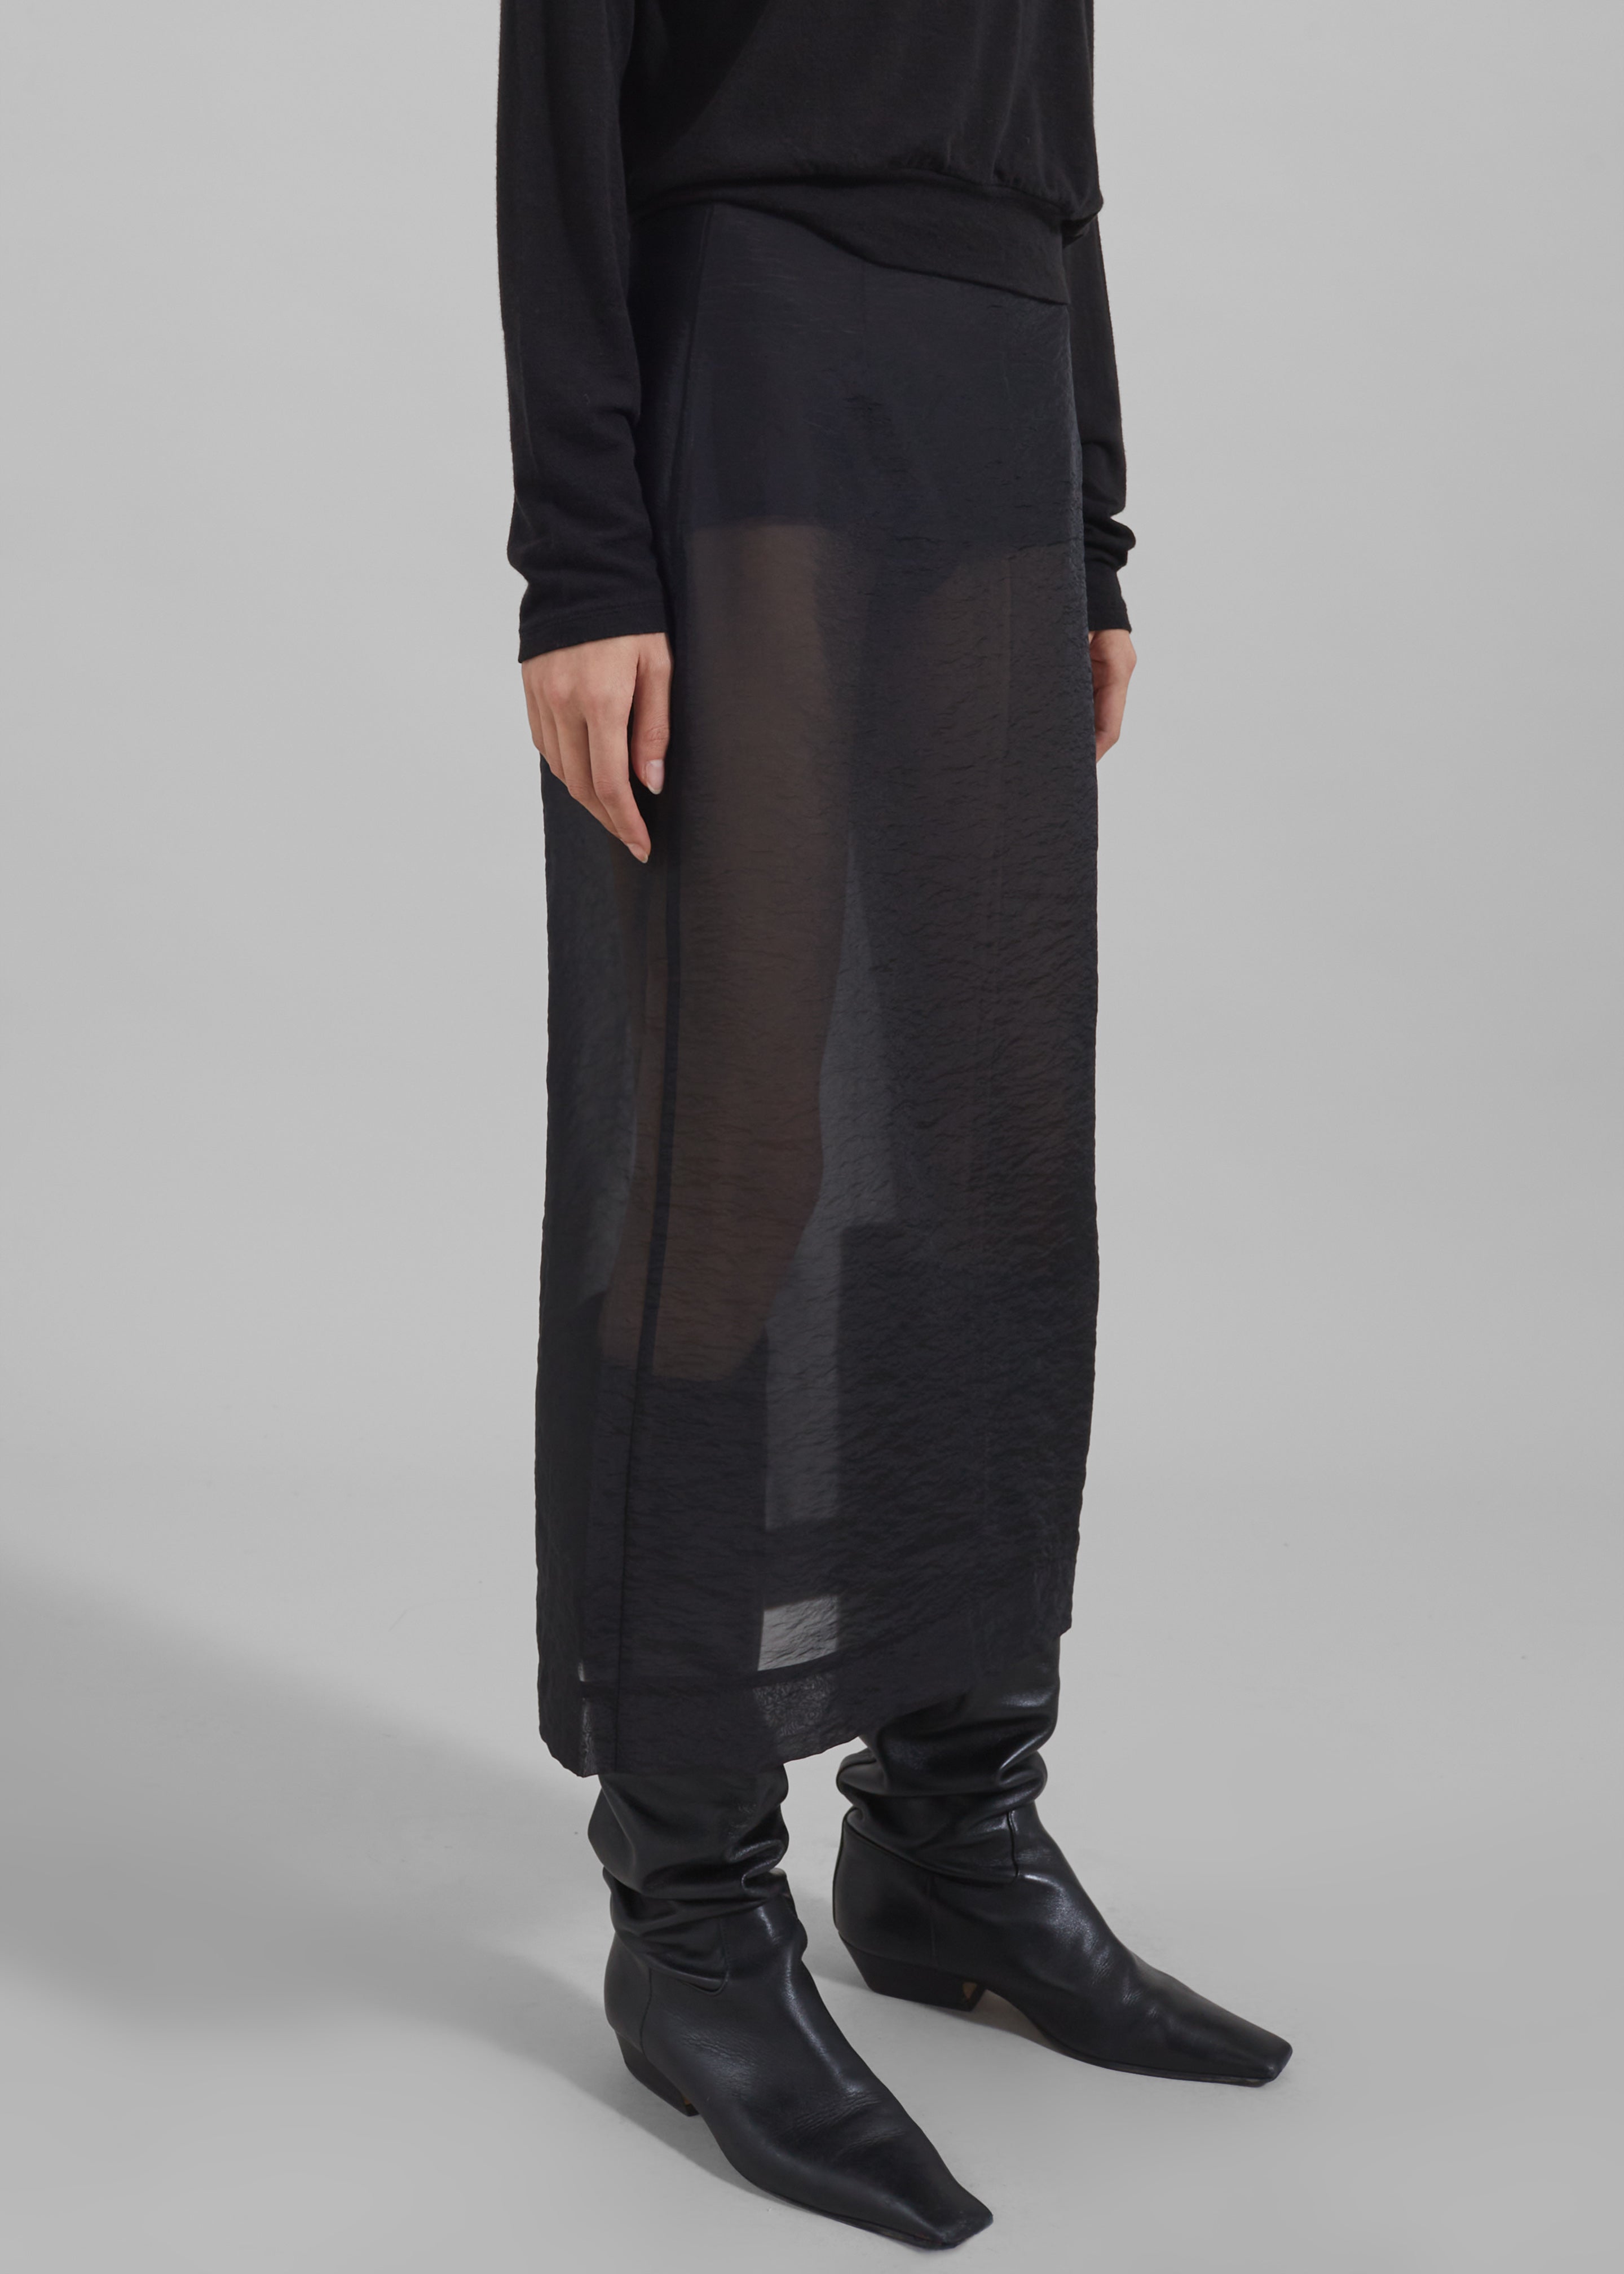 Yara Sheer Midi Skirt - Black - 5